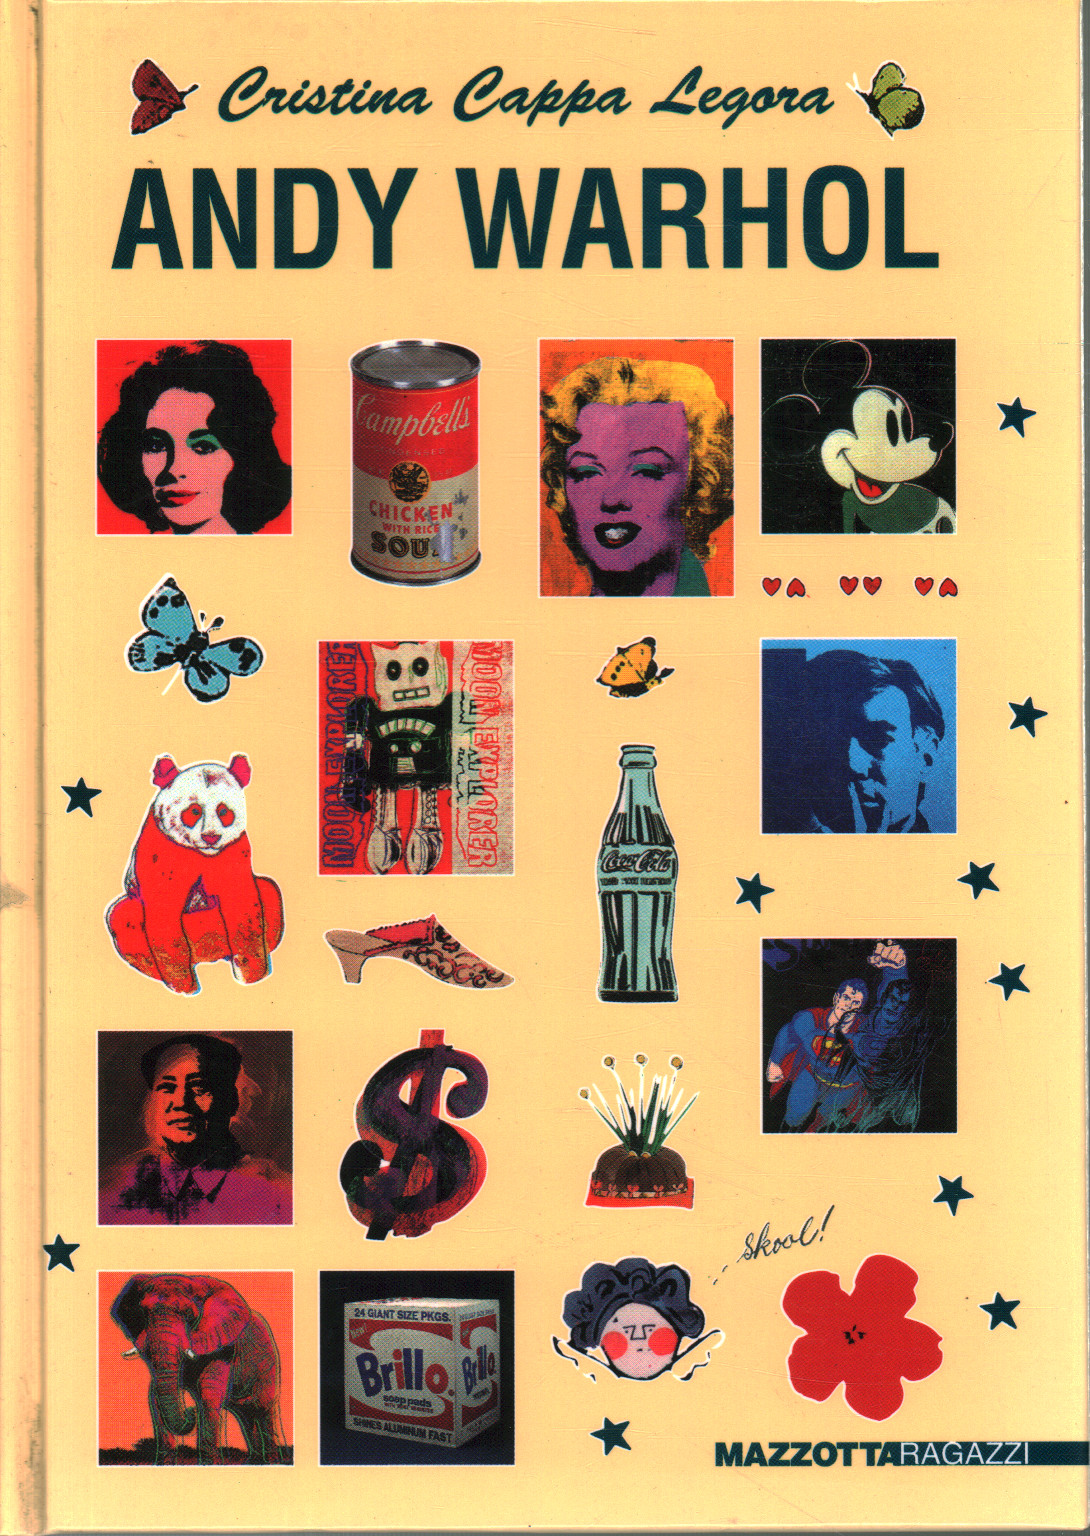 Andy Warhol, Cristina Cappa Legora